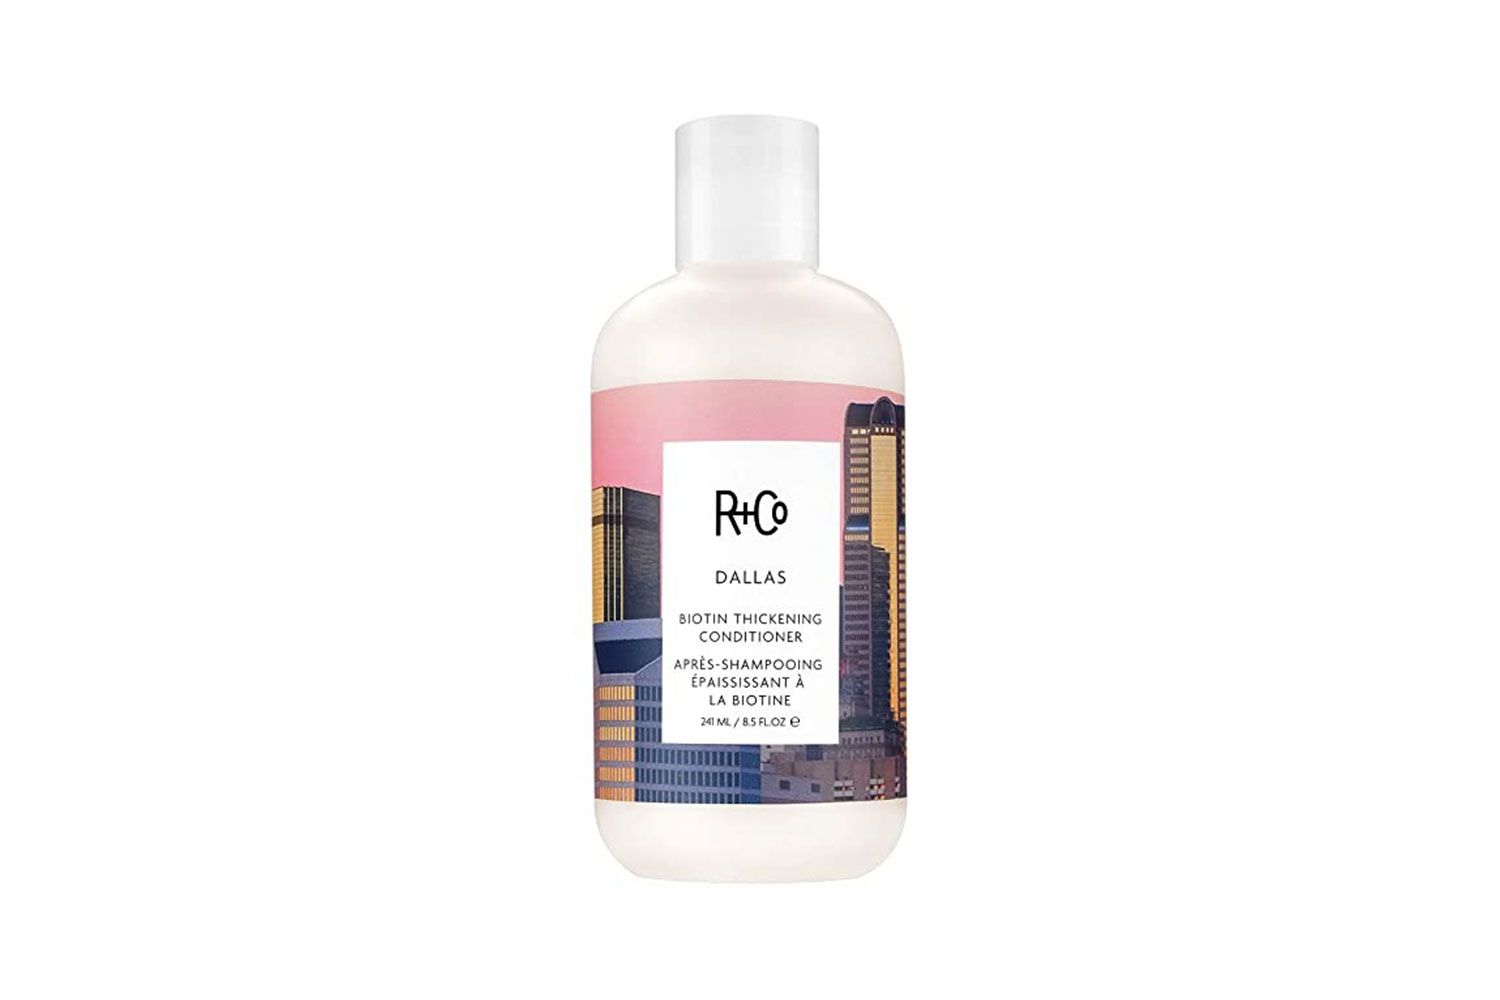 R+Co Dallas Air Condicionador para espessamento de cabelos com biotina